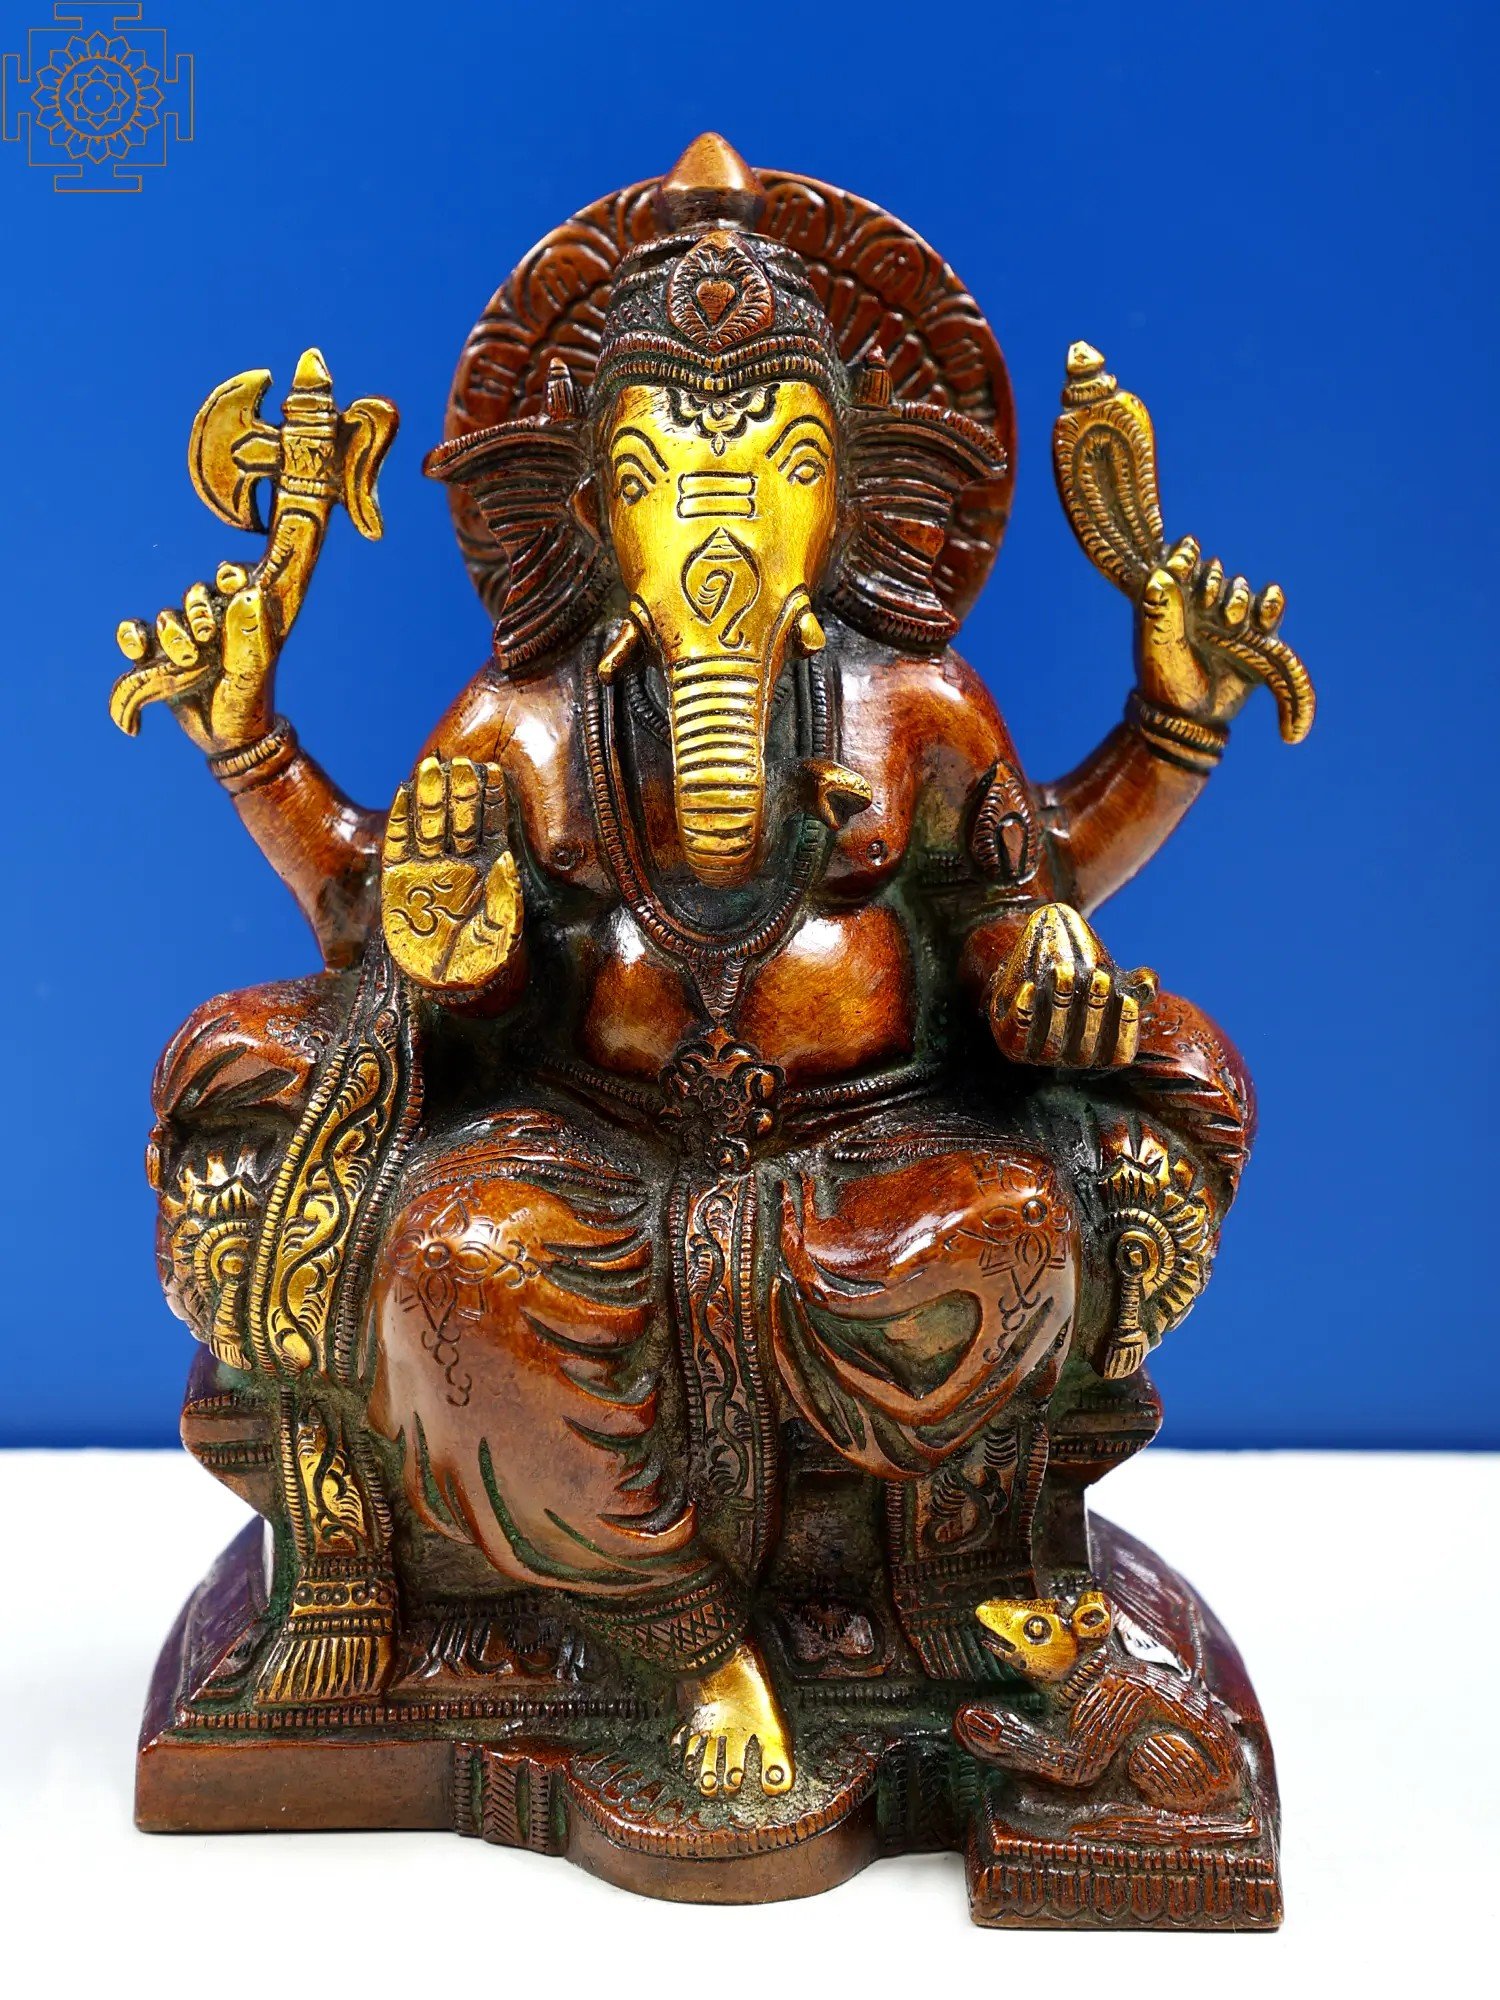 Set of Six Statues Brass Statue Exotic India Musician Ganesha